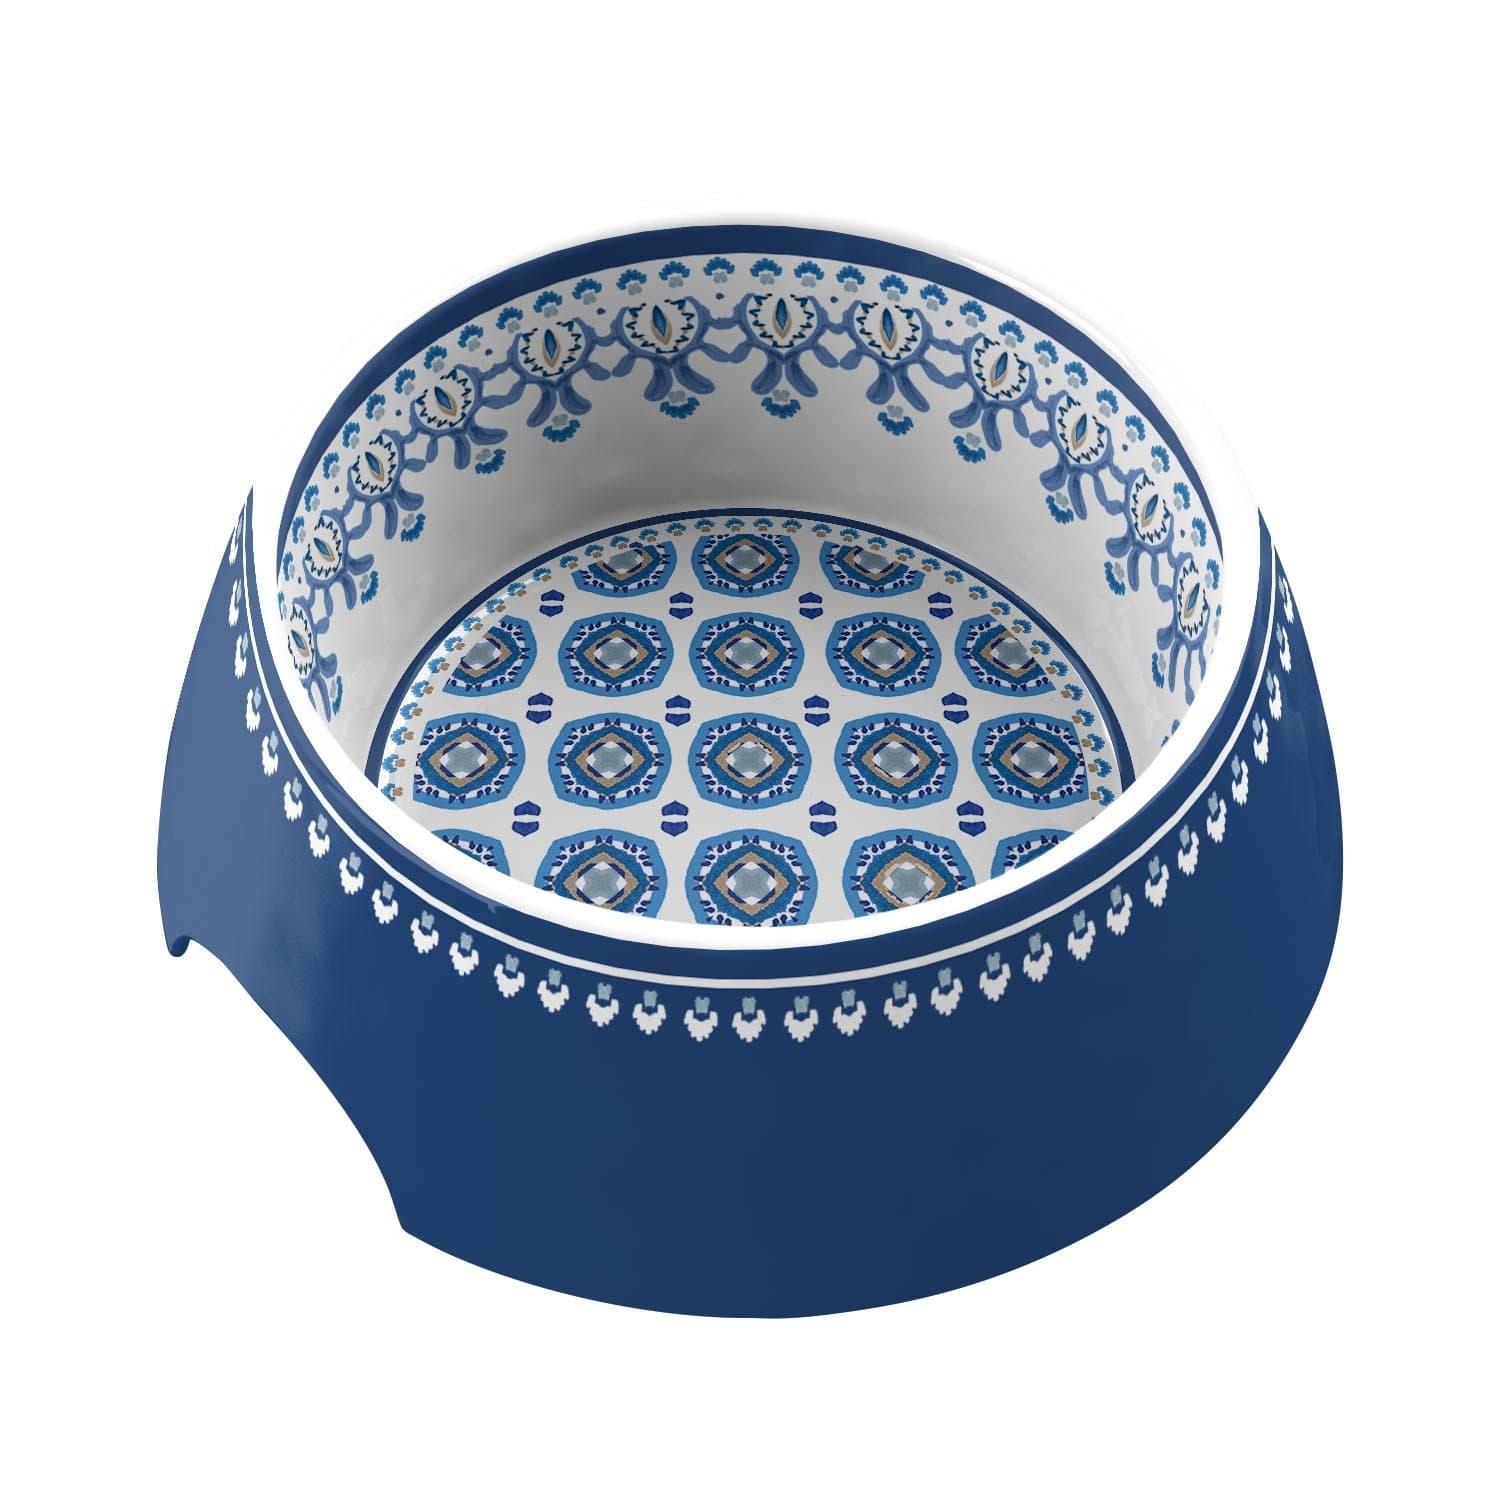 Moroccan style medium dog bowl - Indigo